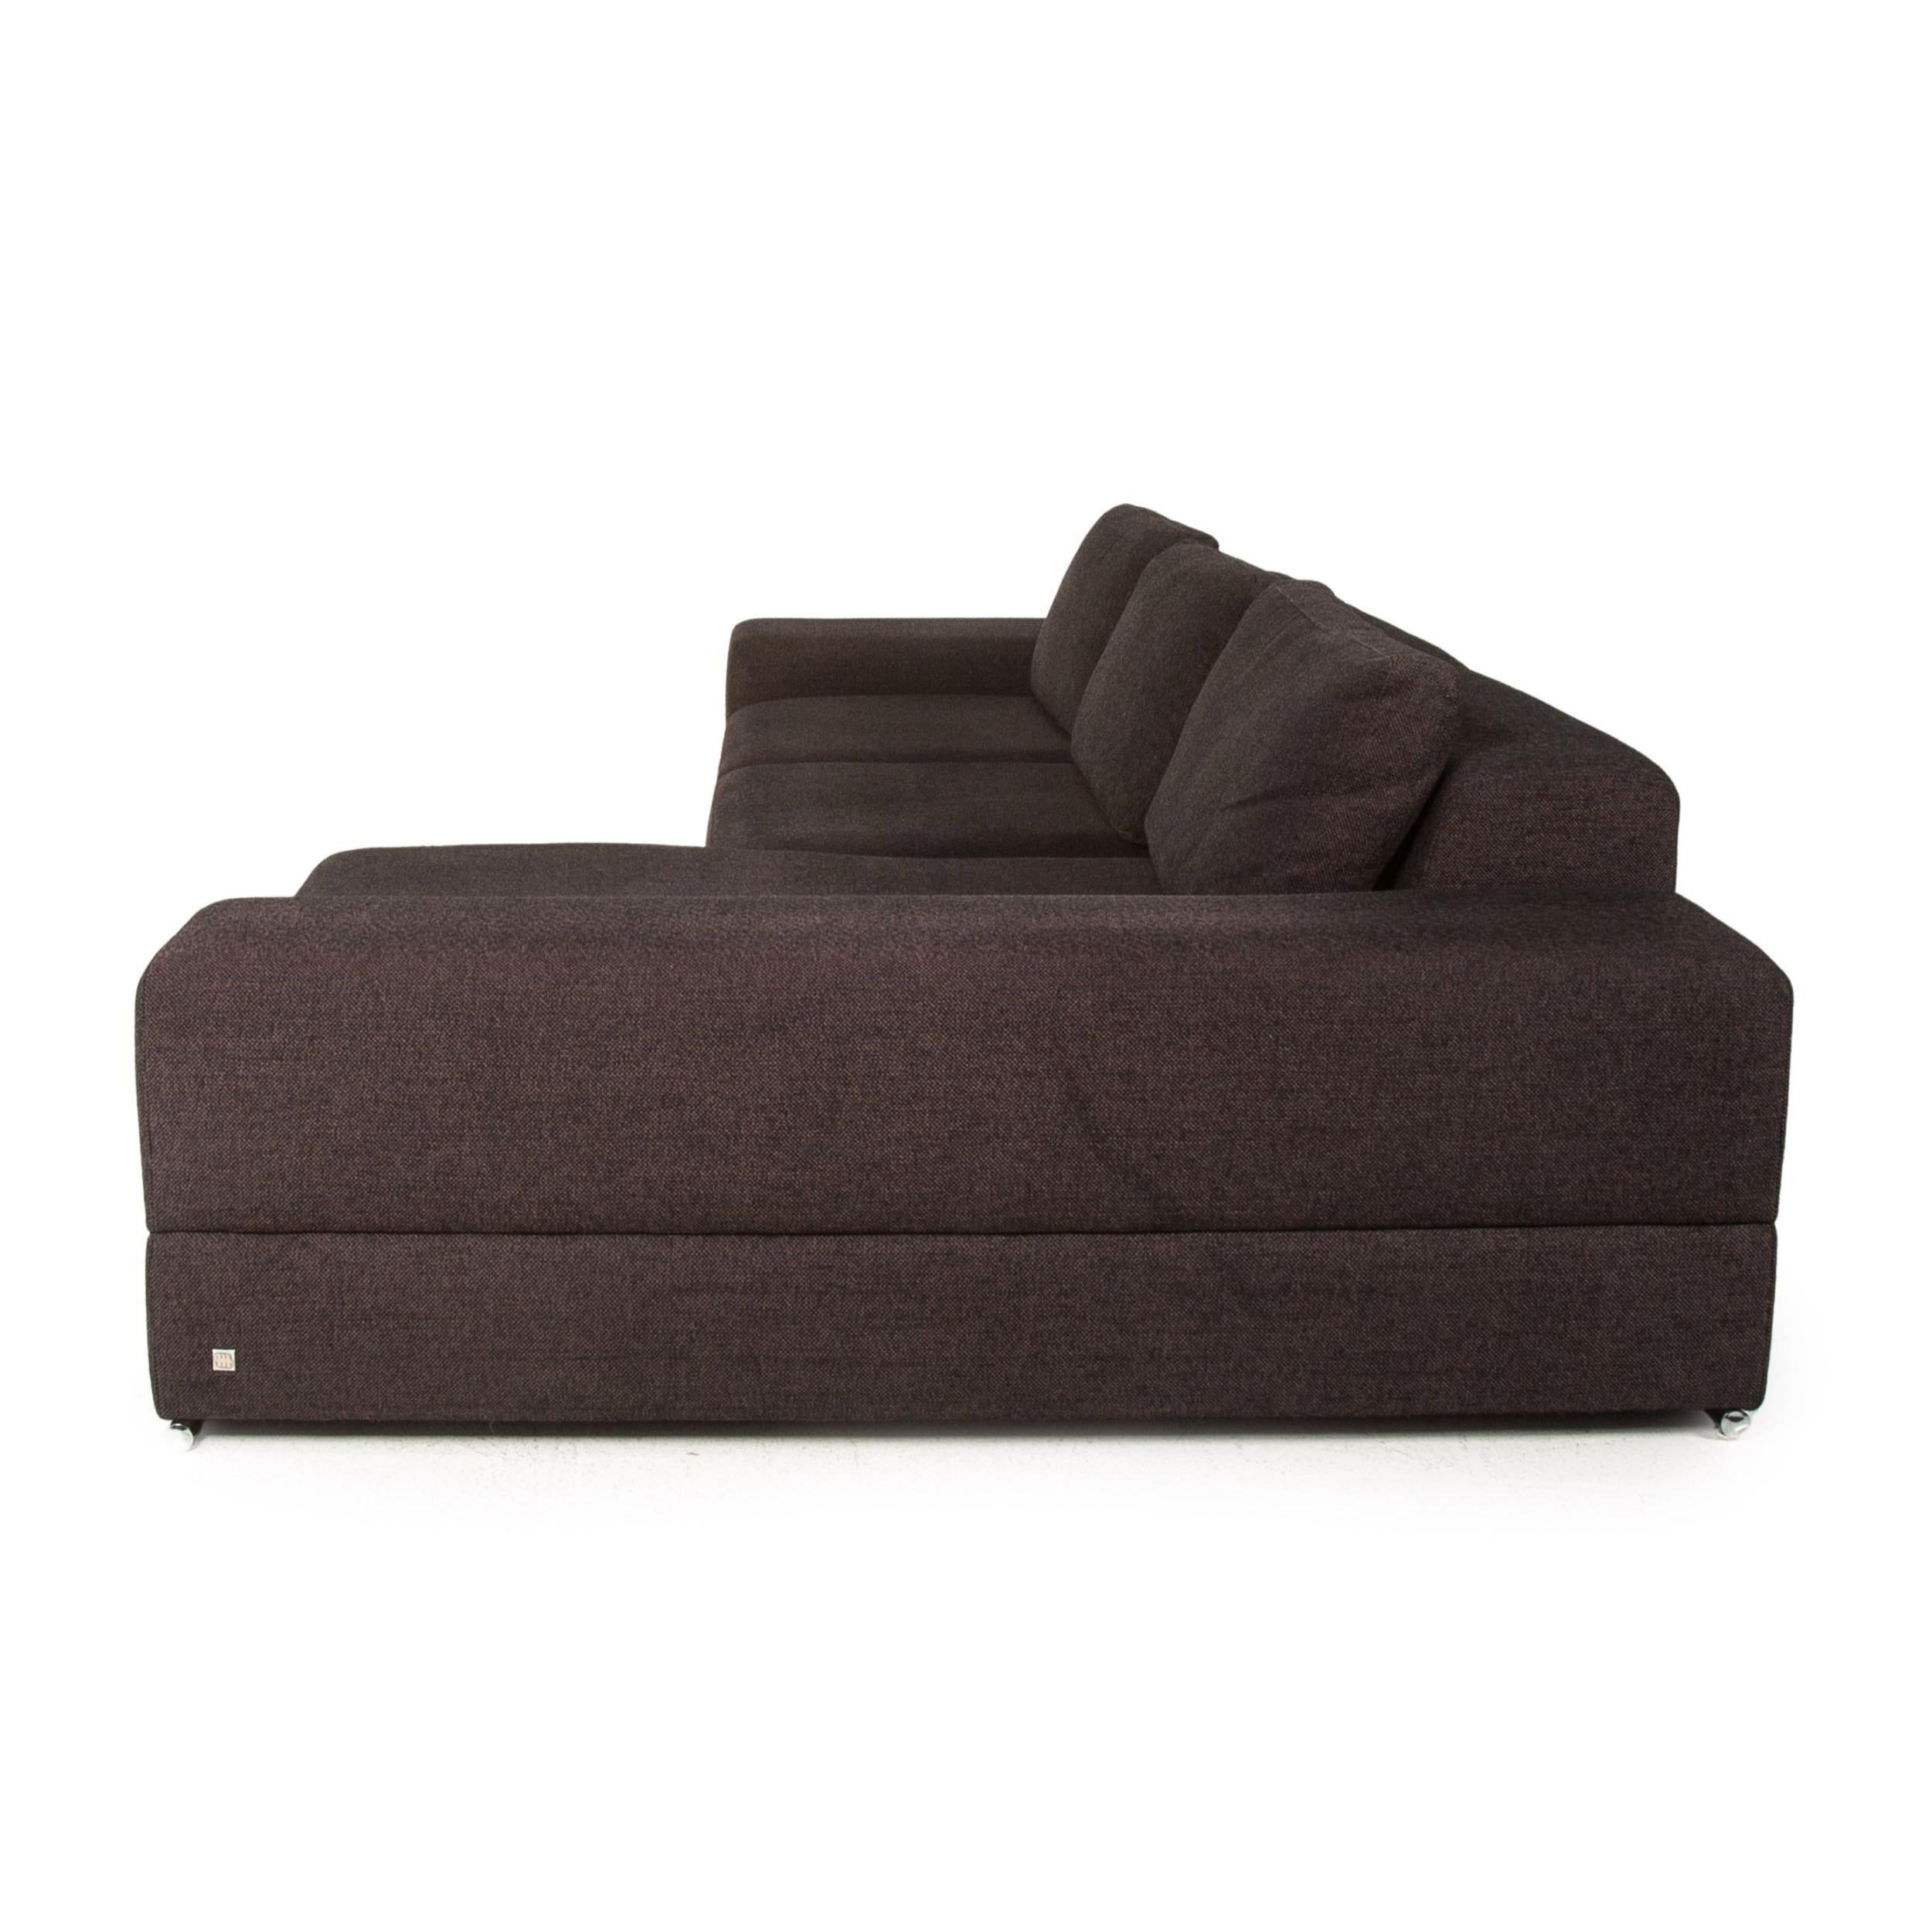 Musterring Fabric Corner Sofa Brown Dark Brown Couch 7